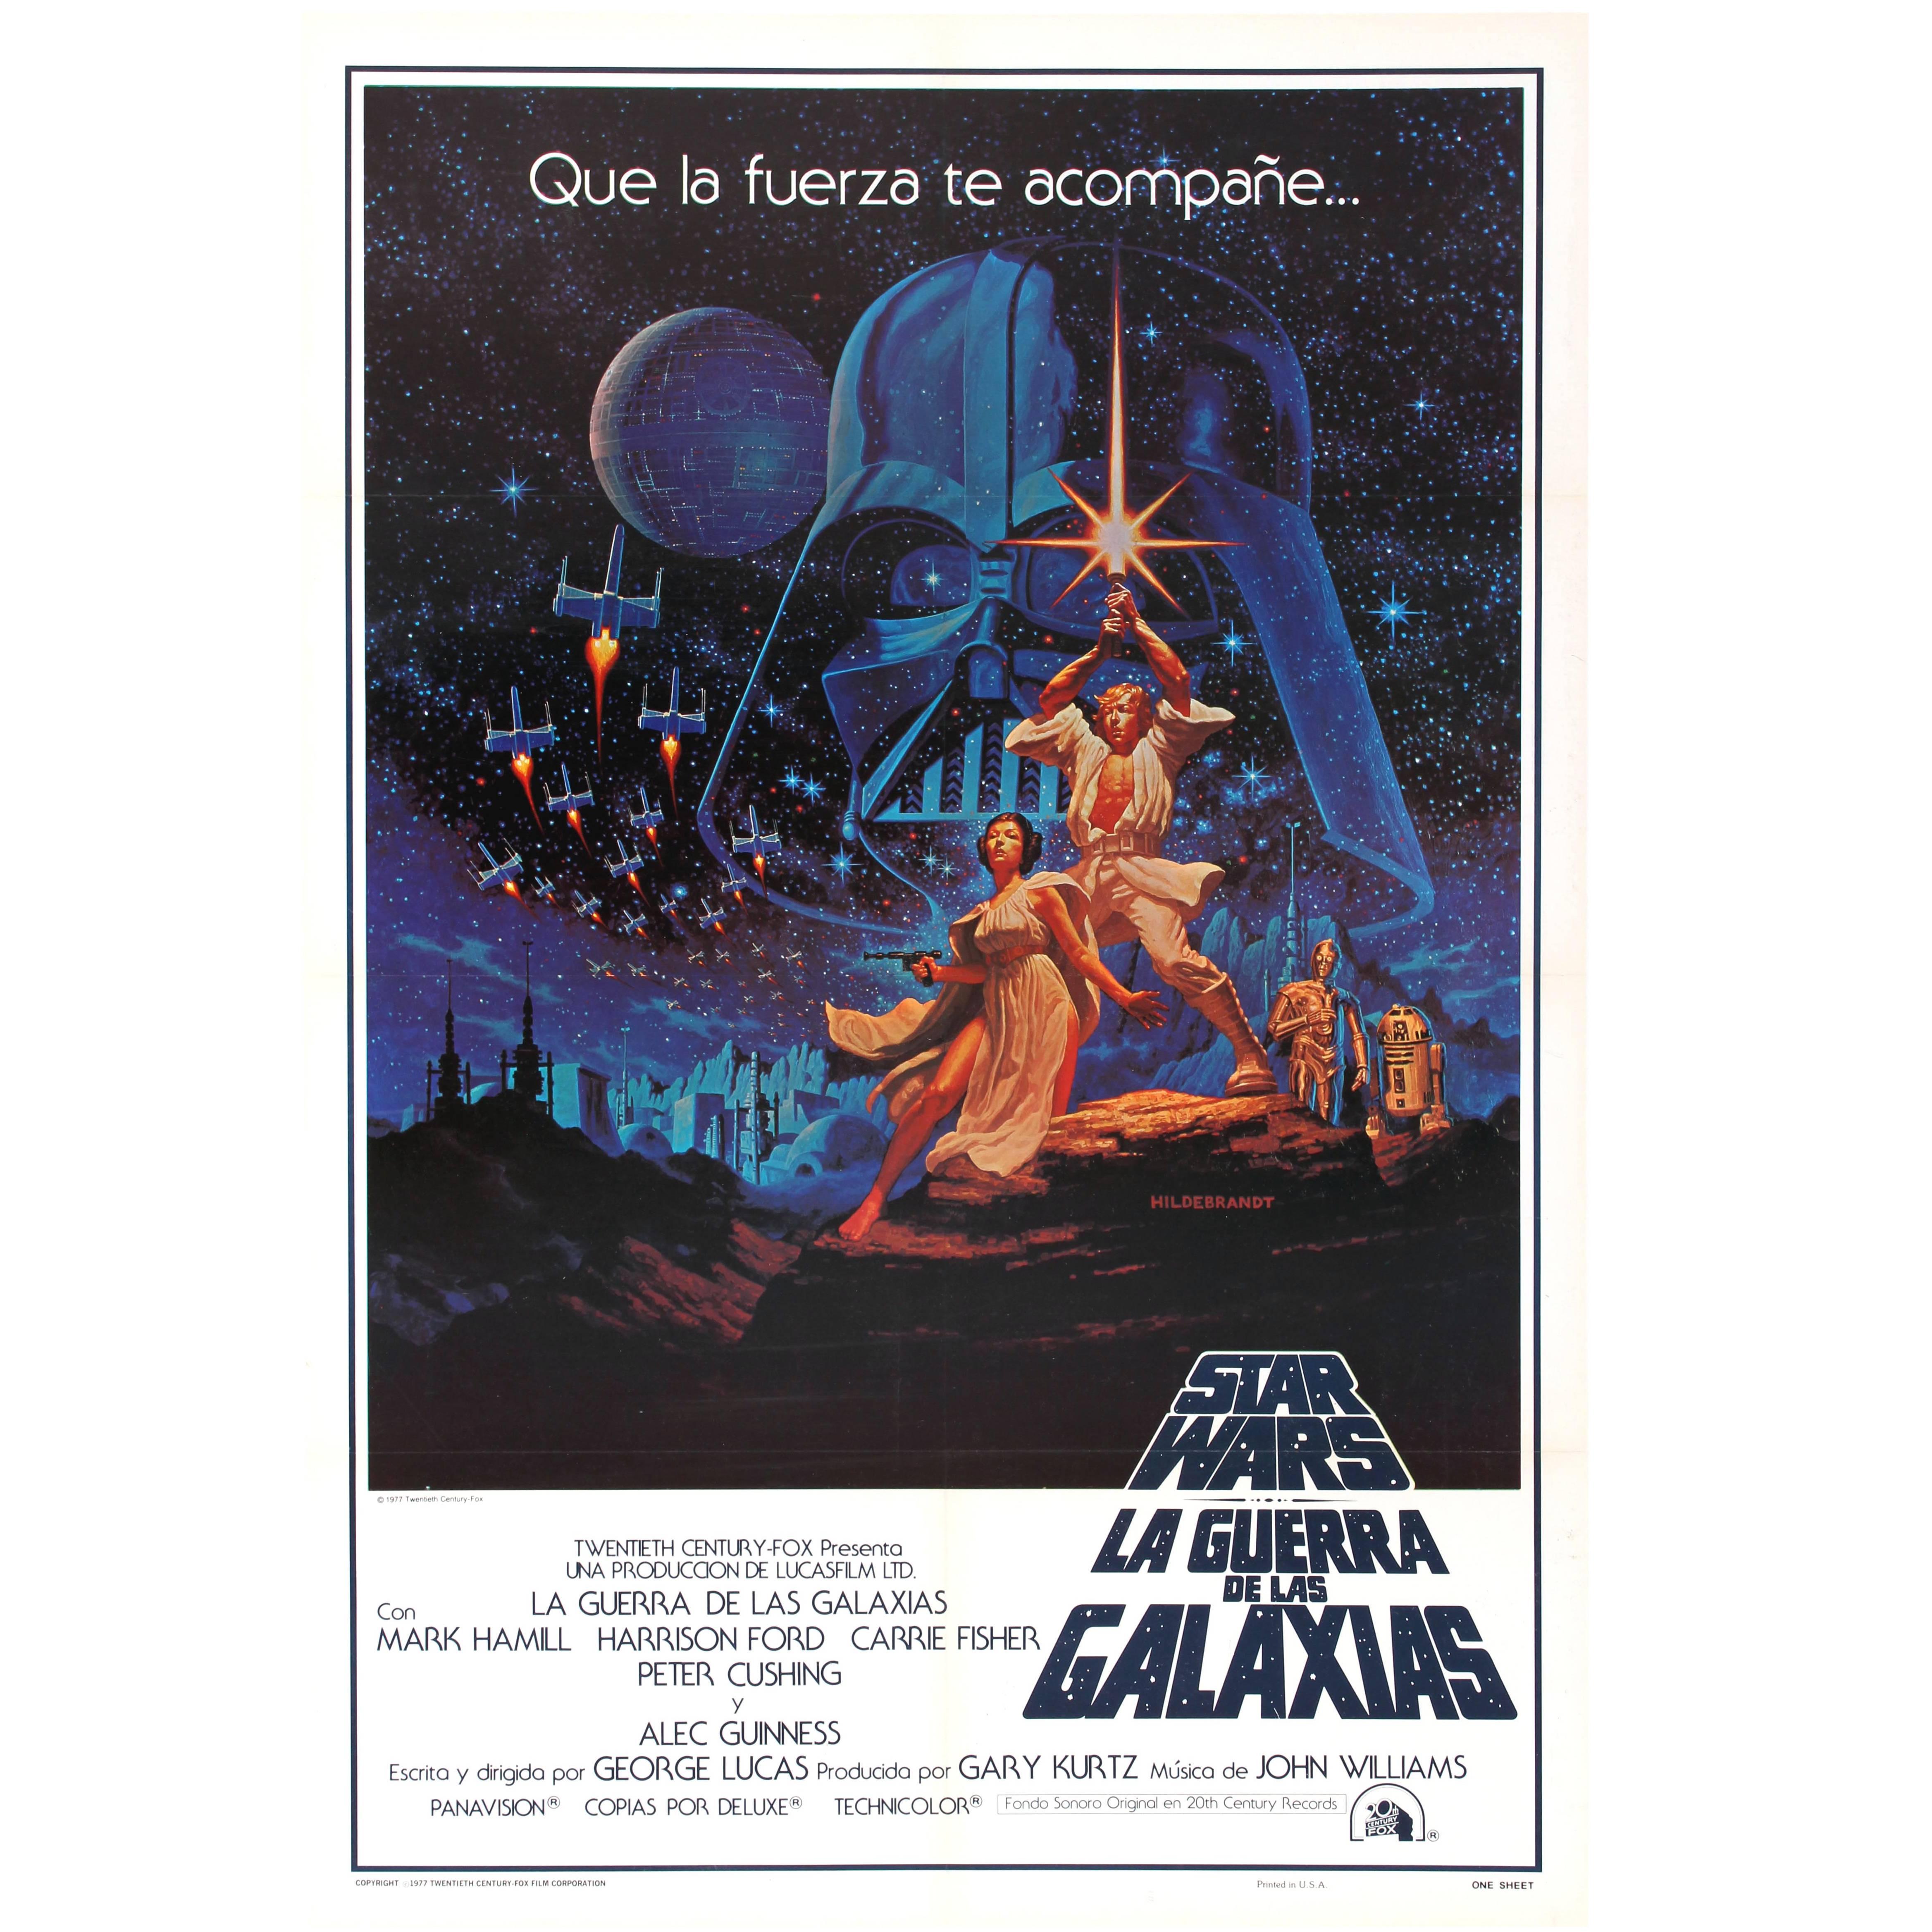 Original Vintage 1977 Iconic Star Wars Movie Poster By The Hildebrandt Brothers